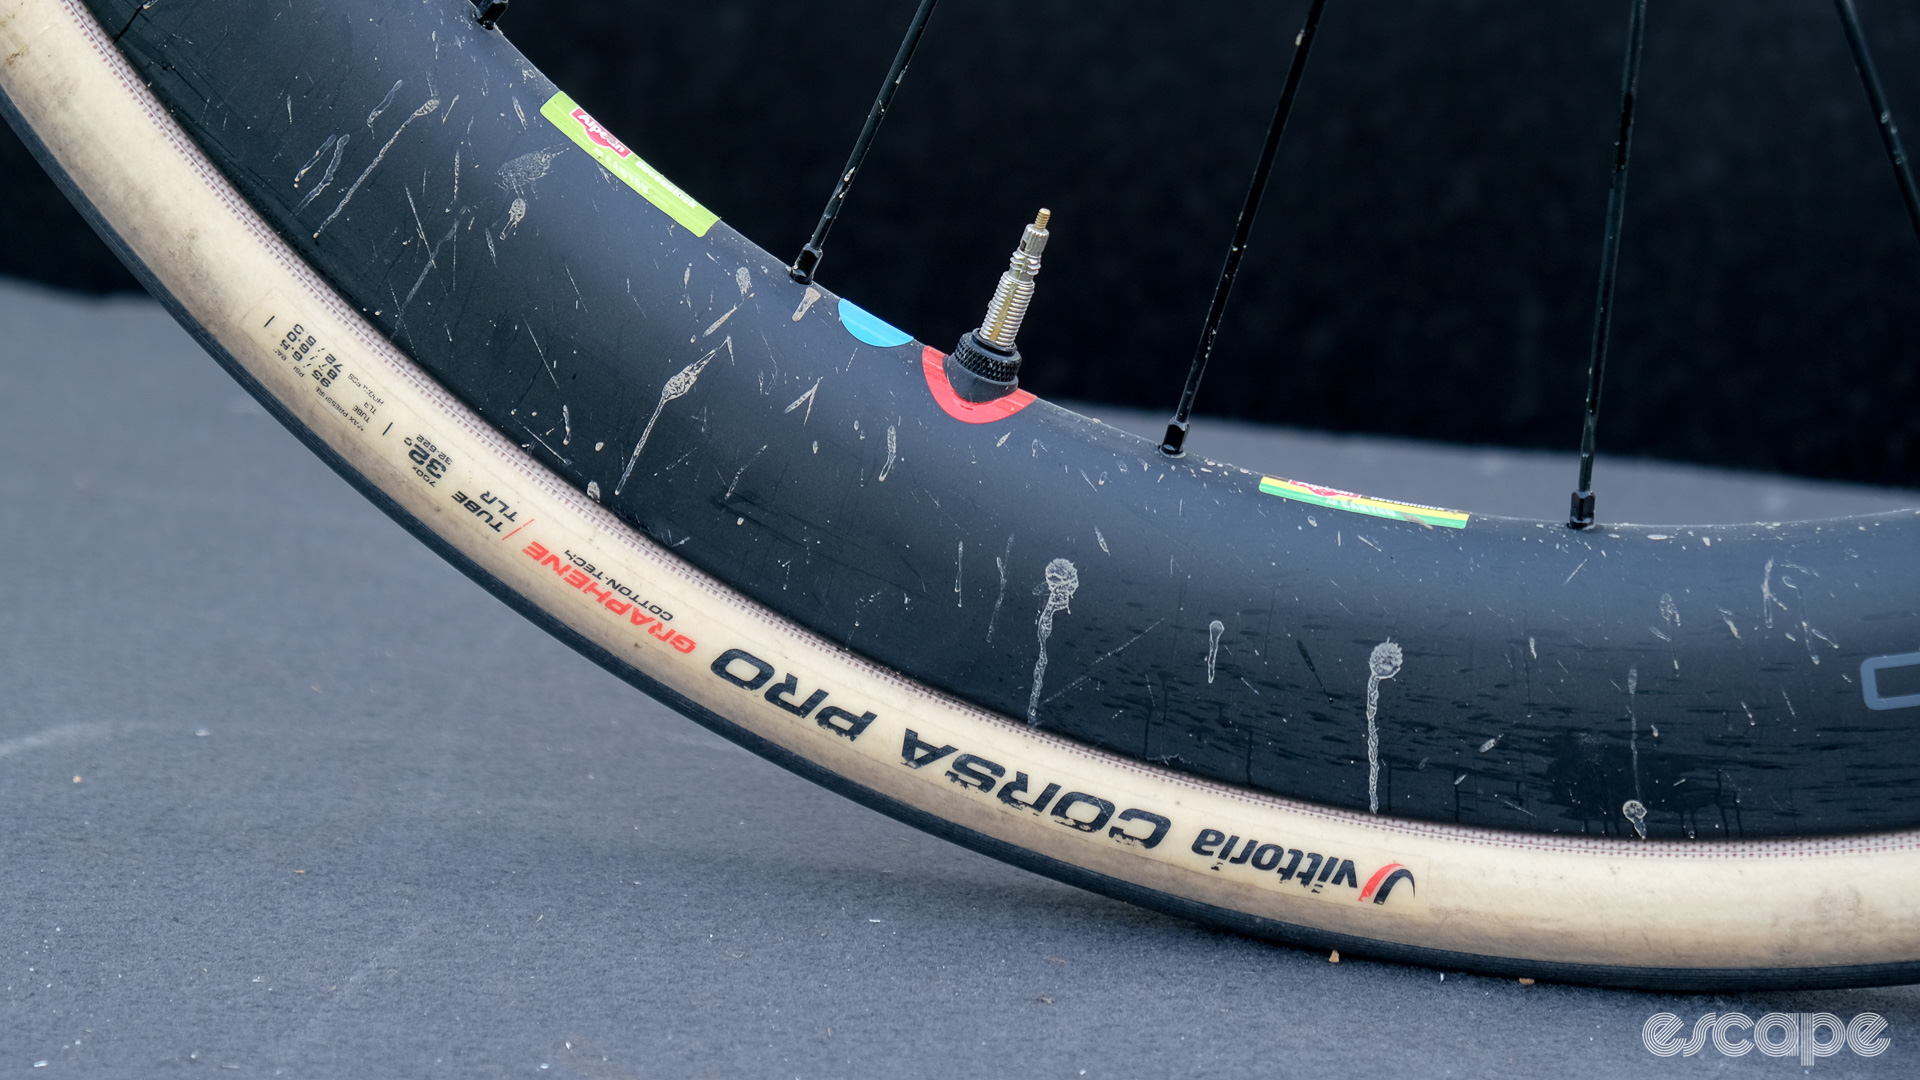 The image shows Jasper Philipsen's tyre